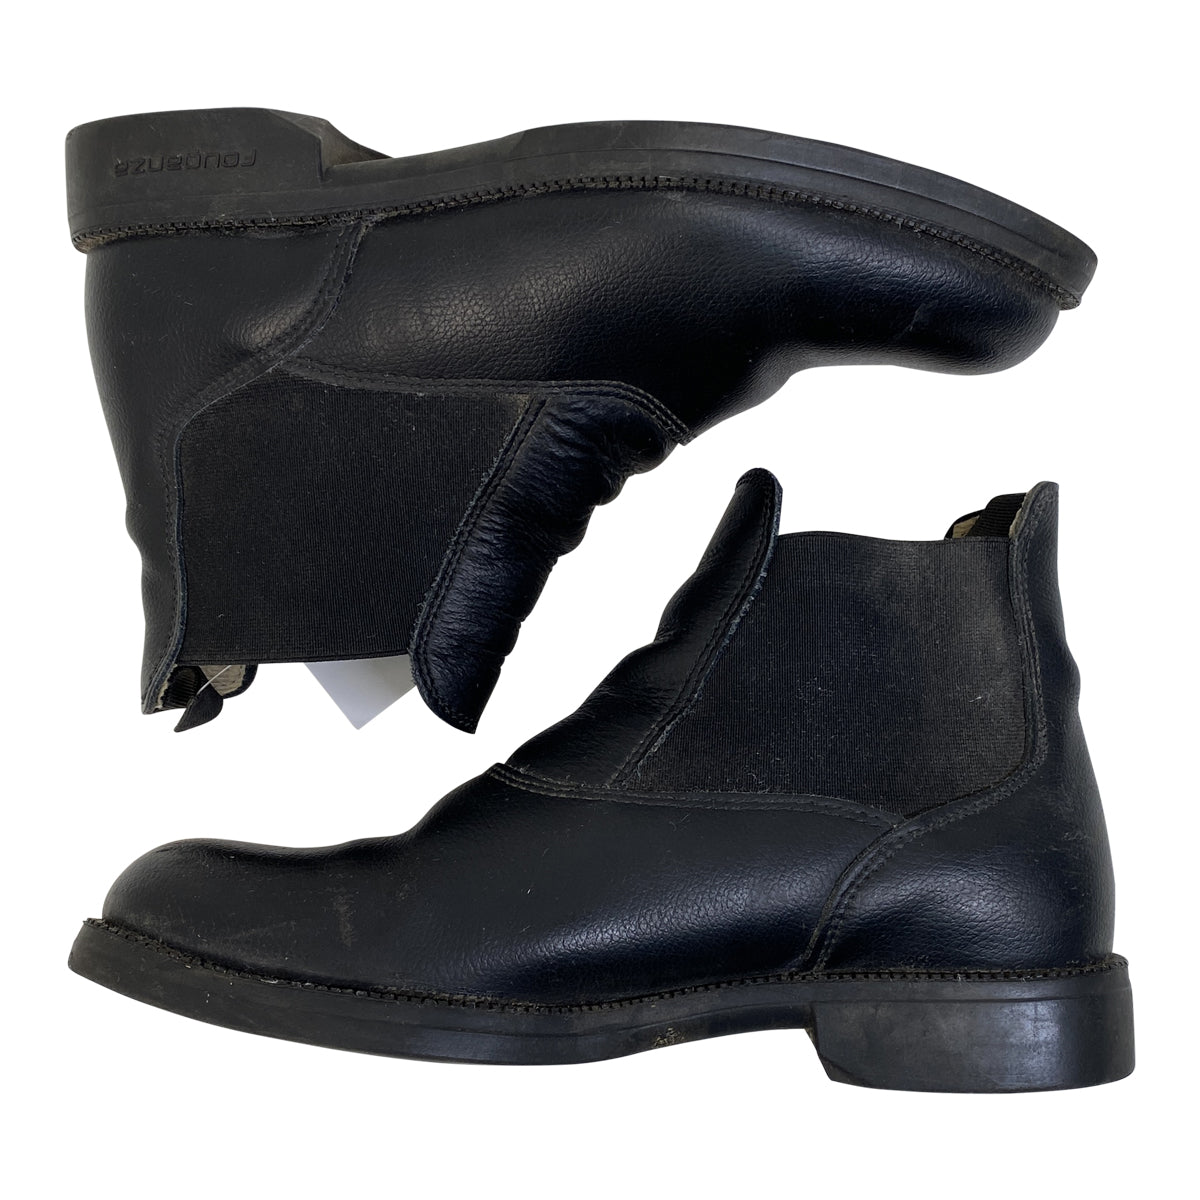 Fouganza '100 Jodhpur' Paddock Boots in Black